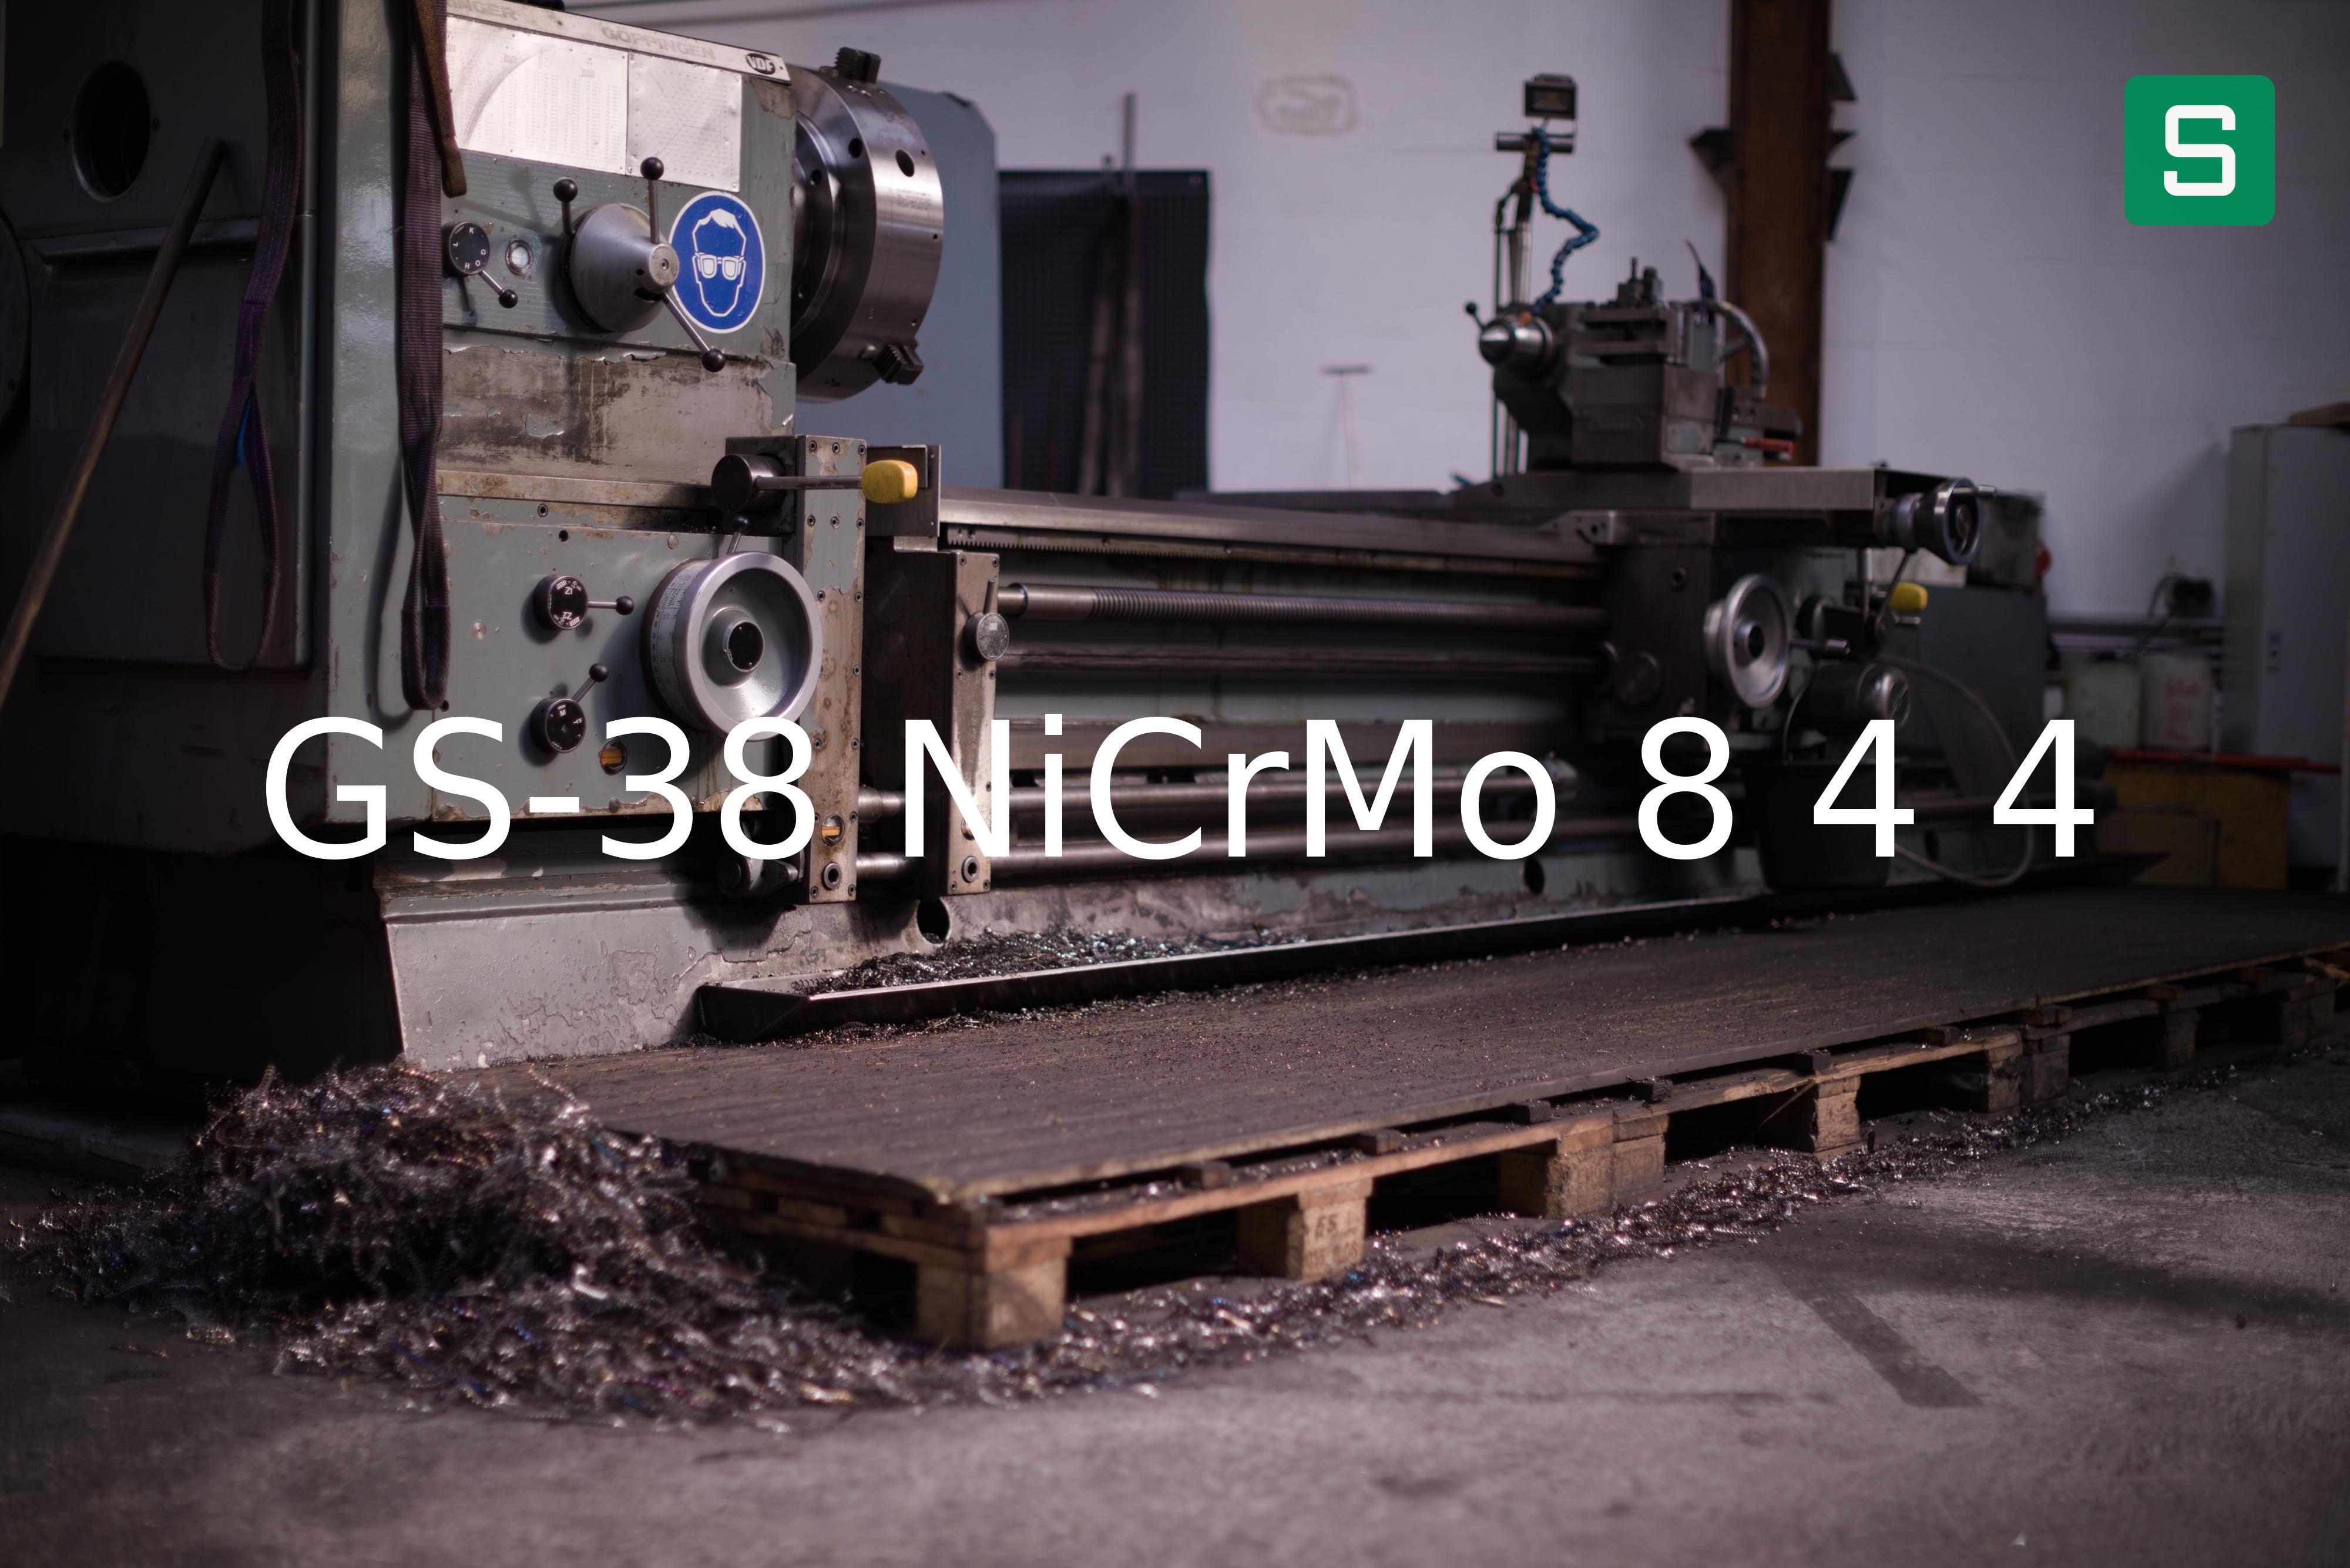 Steel Material: GS-38 NiCrMo 8 4 4